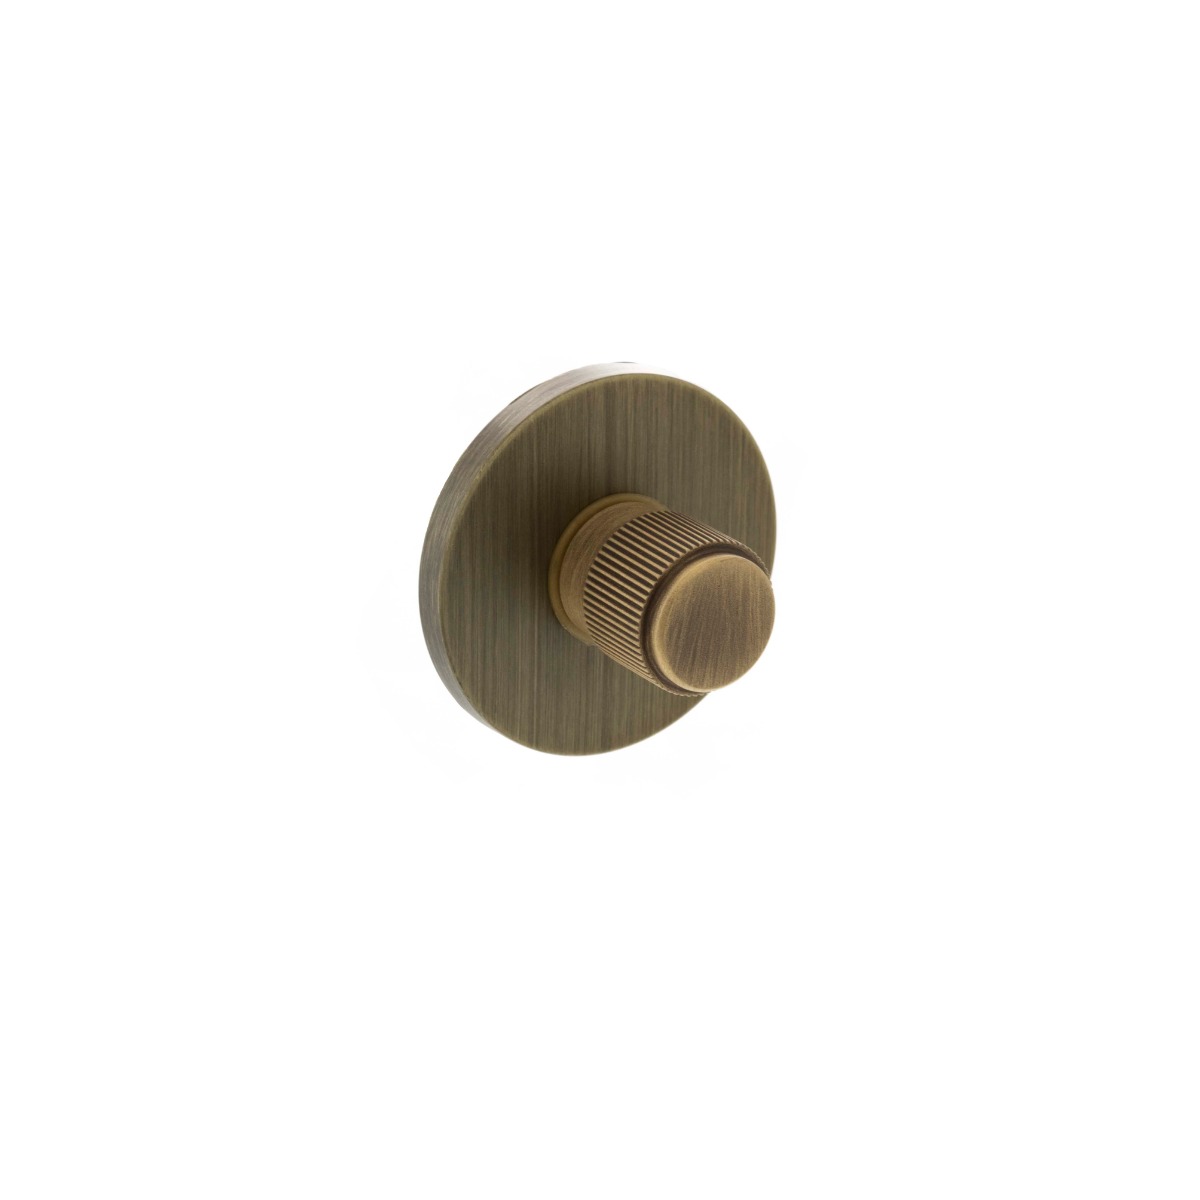 Millhouse Brass Linear WC Turn and Release on 5mm Slimline Round Rose - Yester Bronze MHSRLWCYB